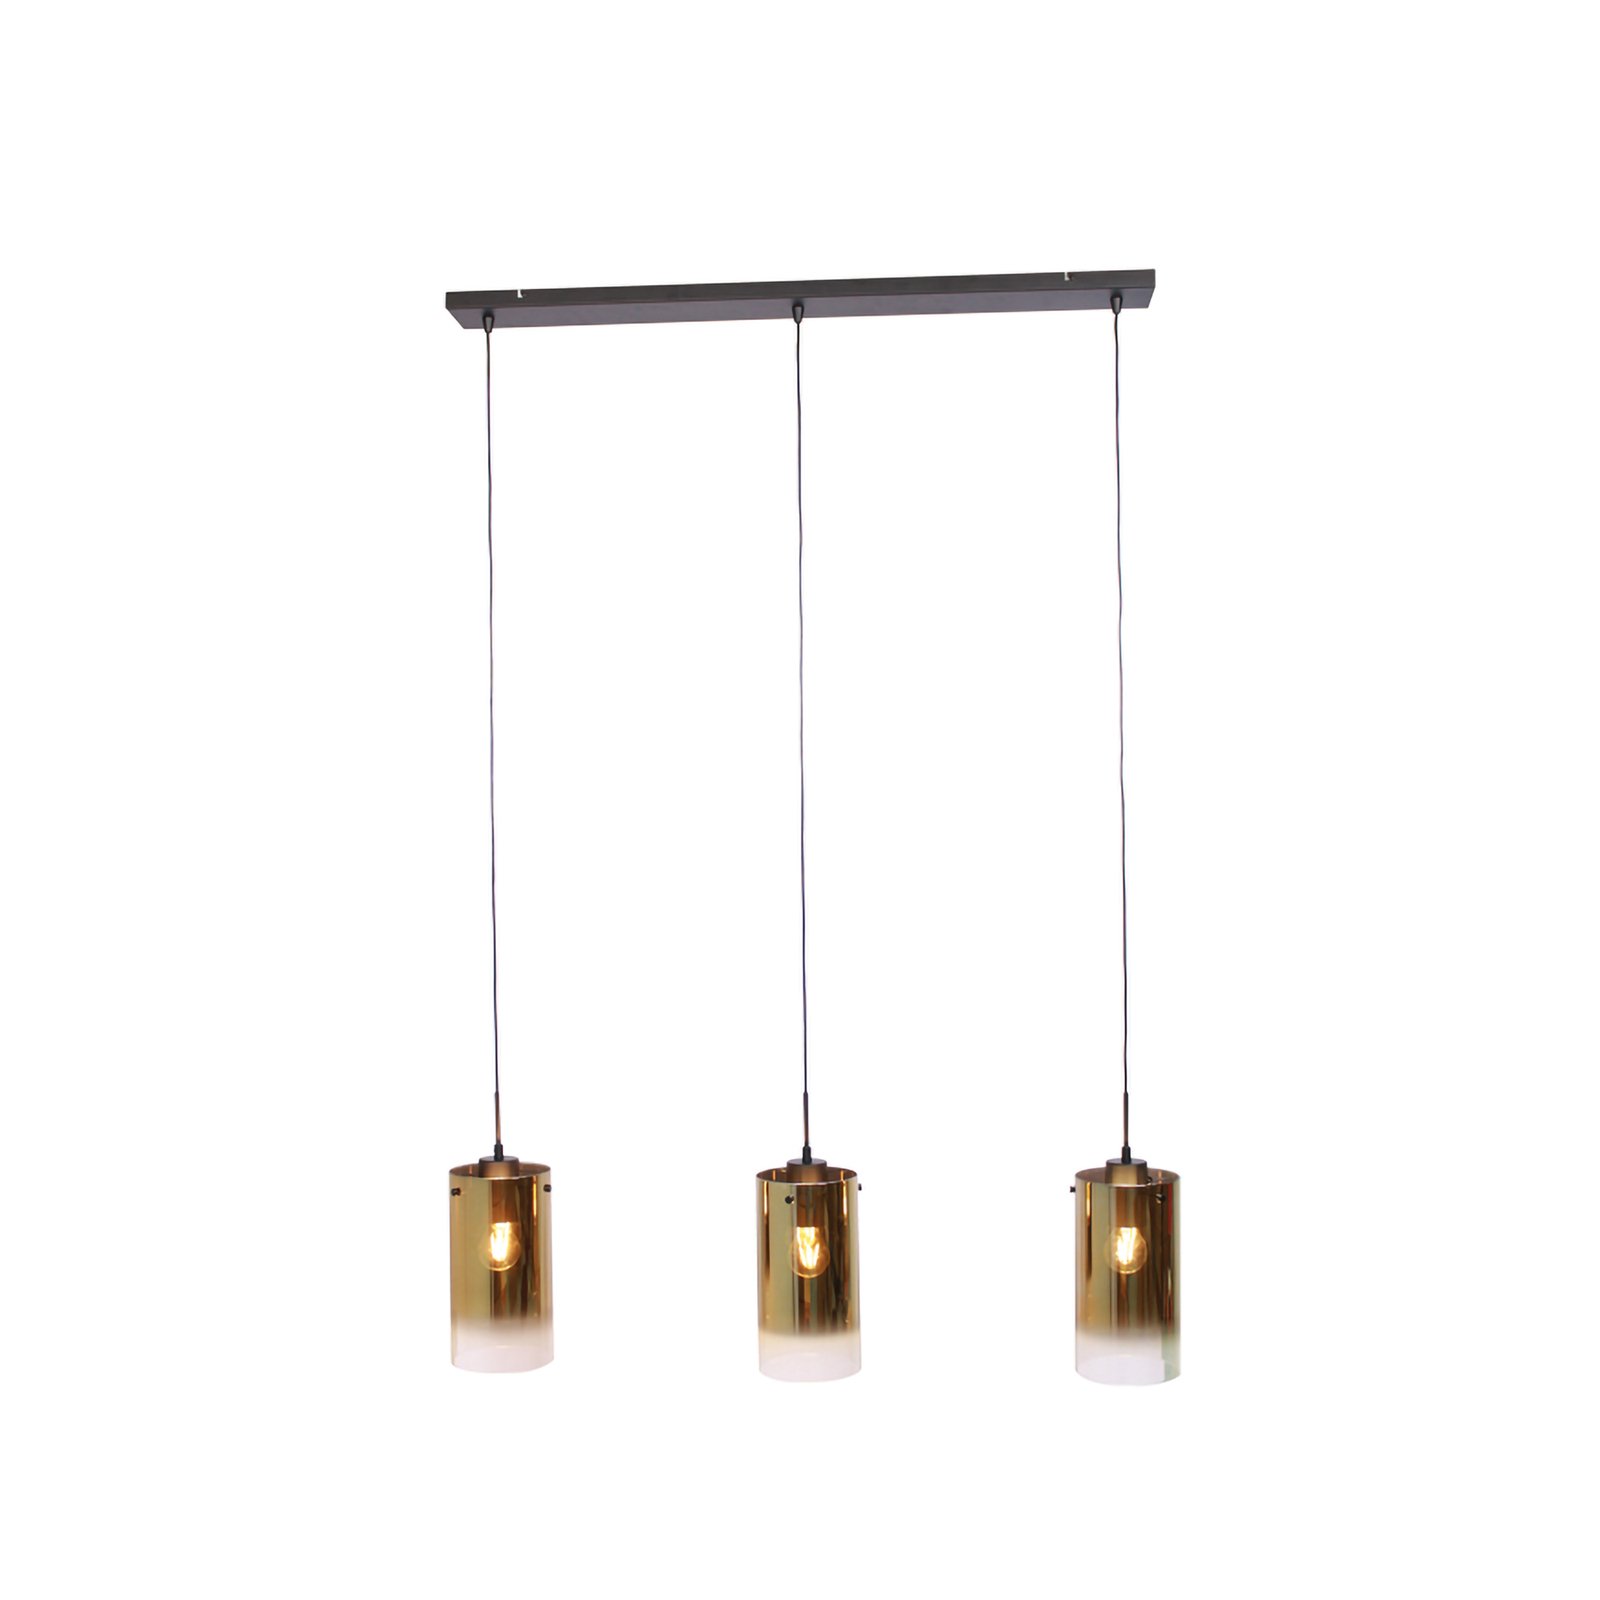 Viseća lampa Ventotto, crna/zlatna, dužina 105 cm, 3 žarulje. Staklo